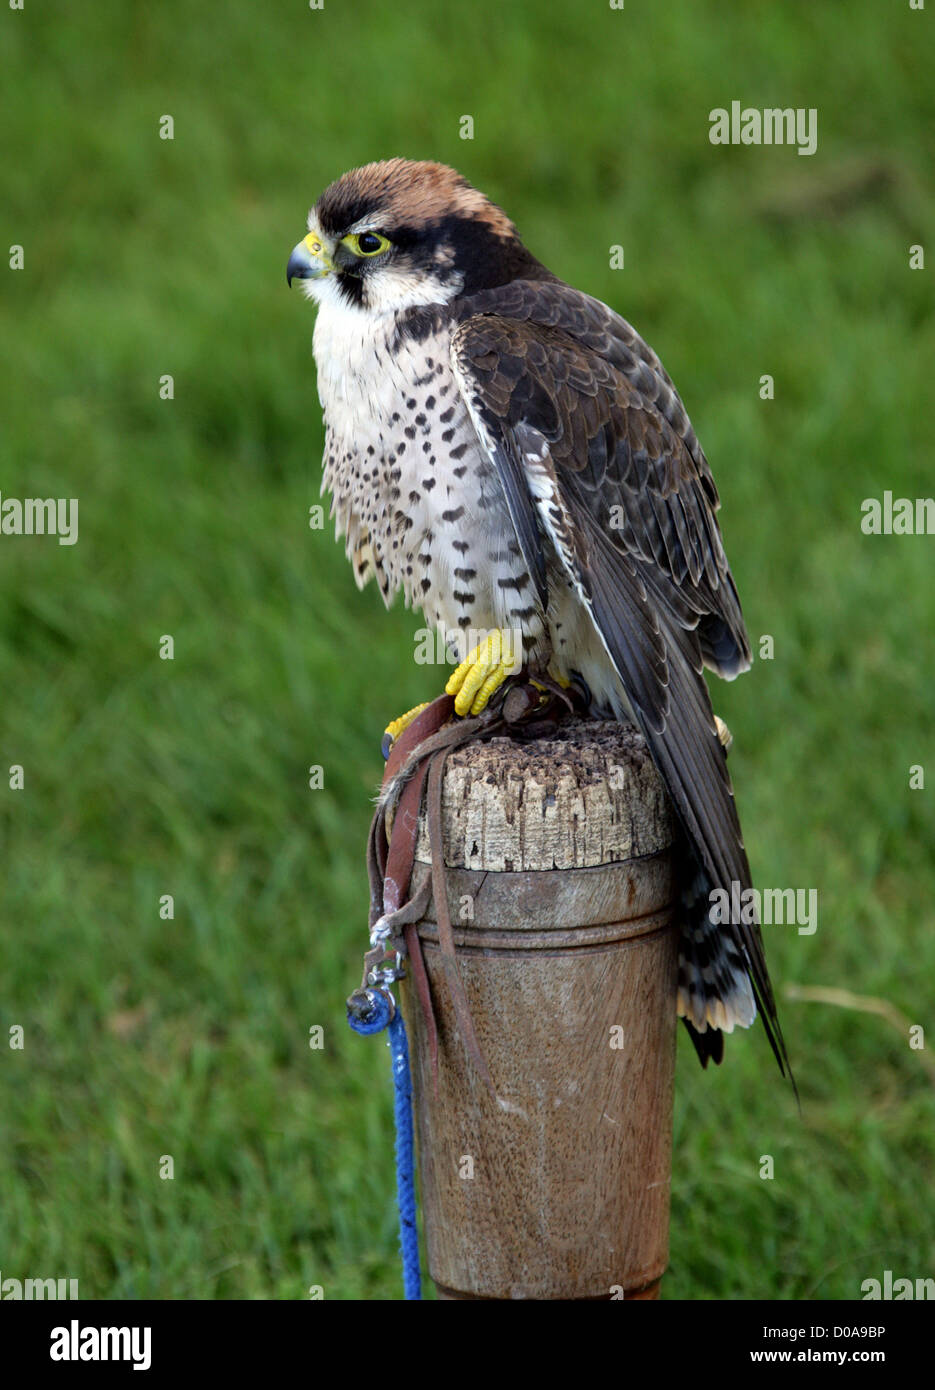 Lanner Falcon, Falco biarmicus, Falconidae, Falconiformes. Europe, Africa and Asia. Stock Photo